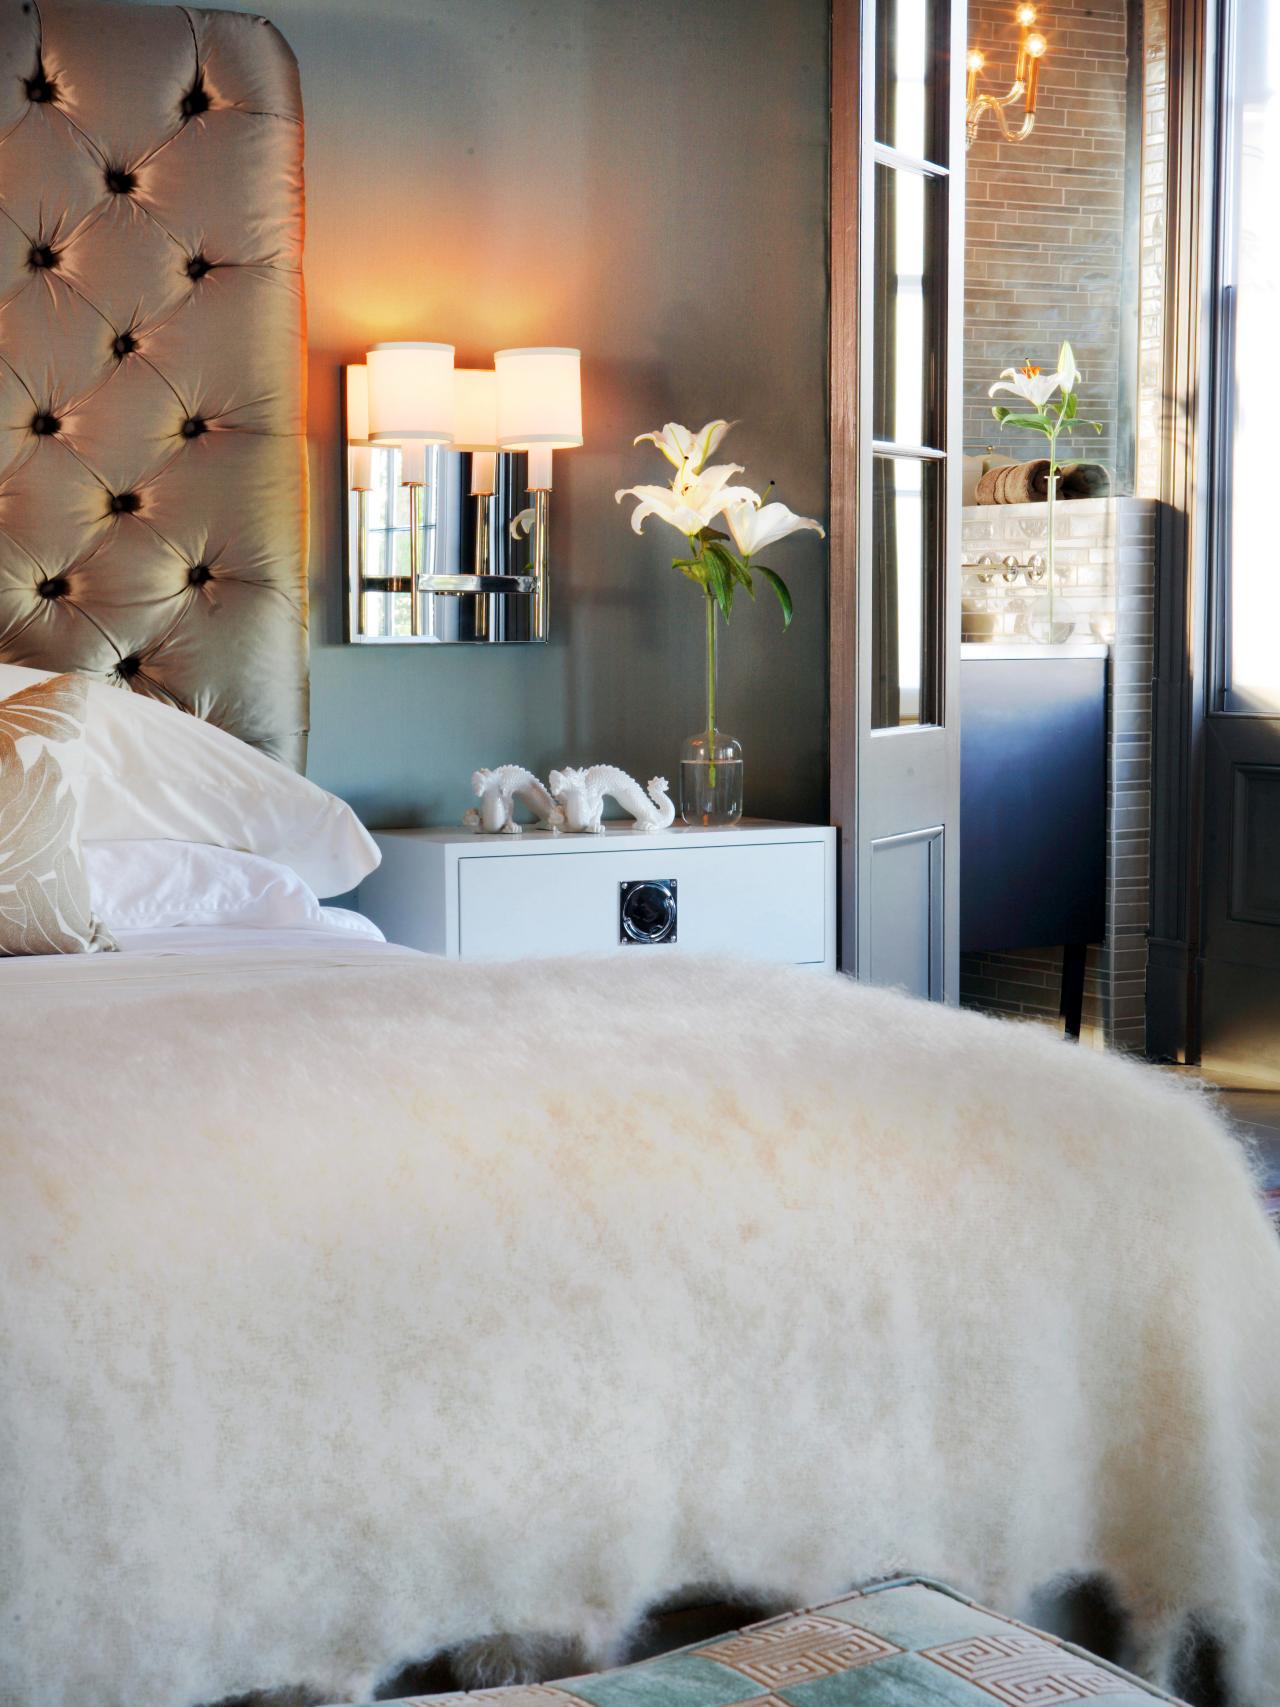 Bedroom Lighting Ideas | Bedrooms & Bedroom Decorating Ideas | HGTV